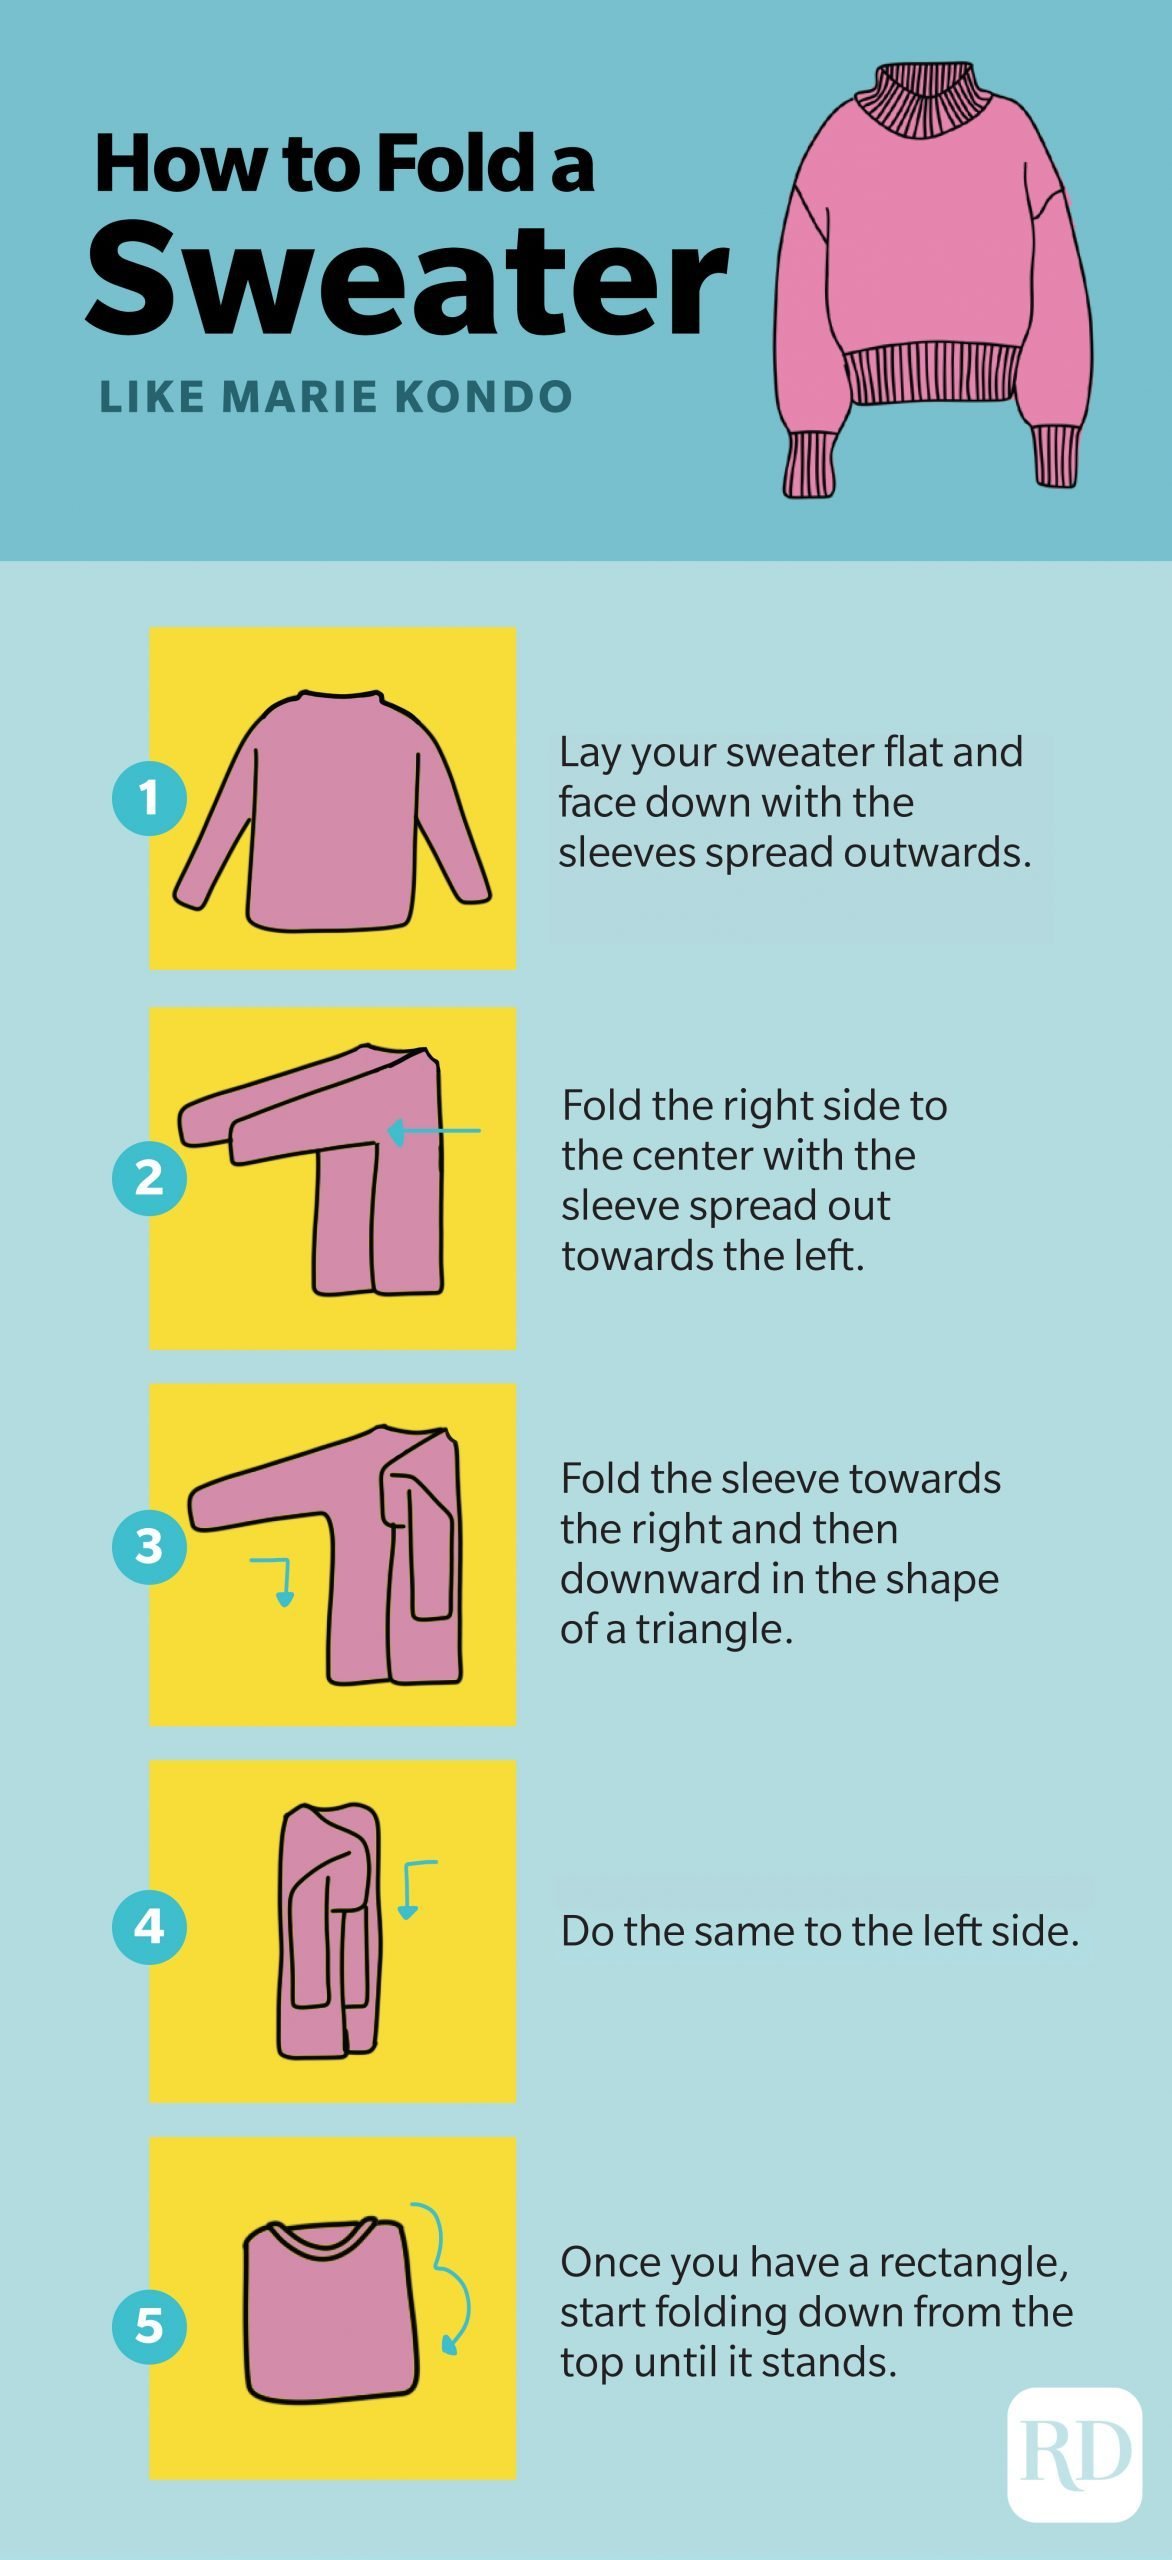 How to fold a sweater like Marie Kondo infographic